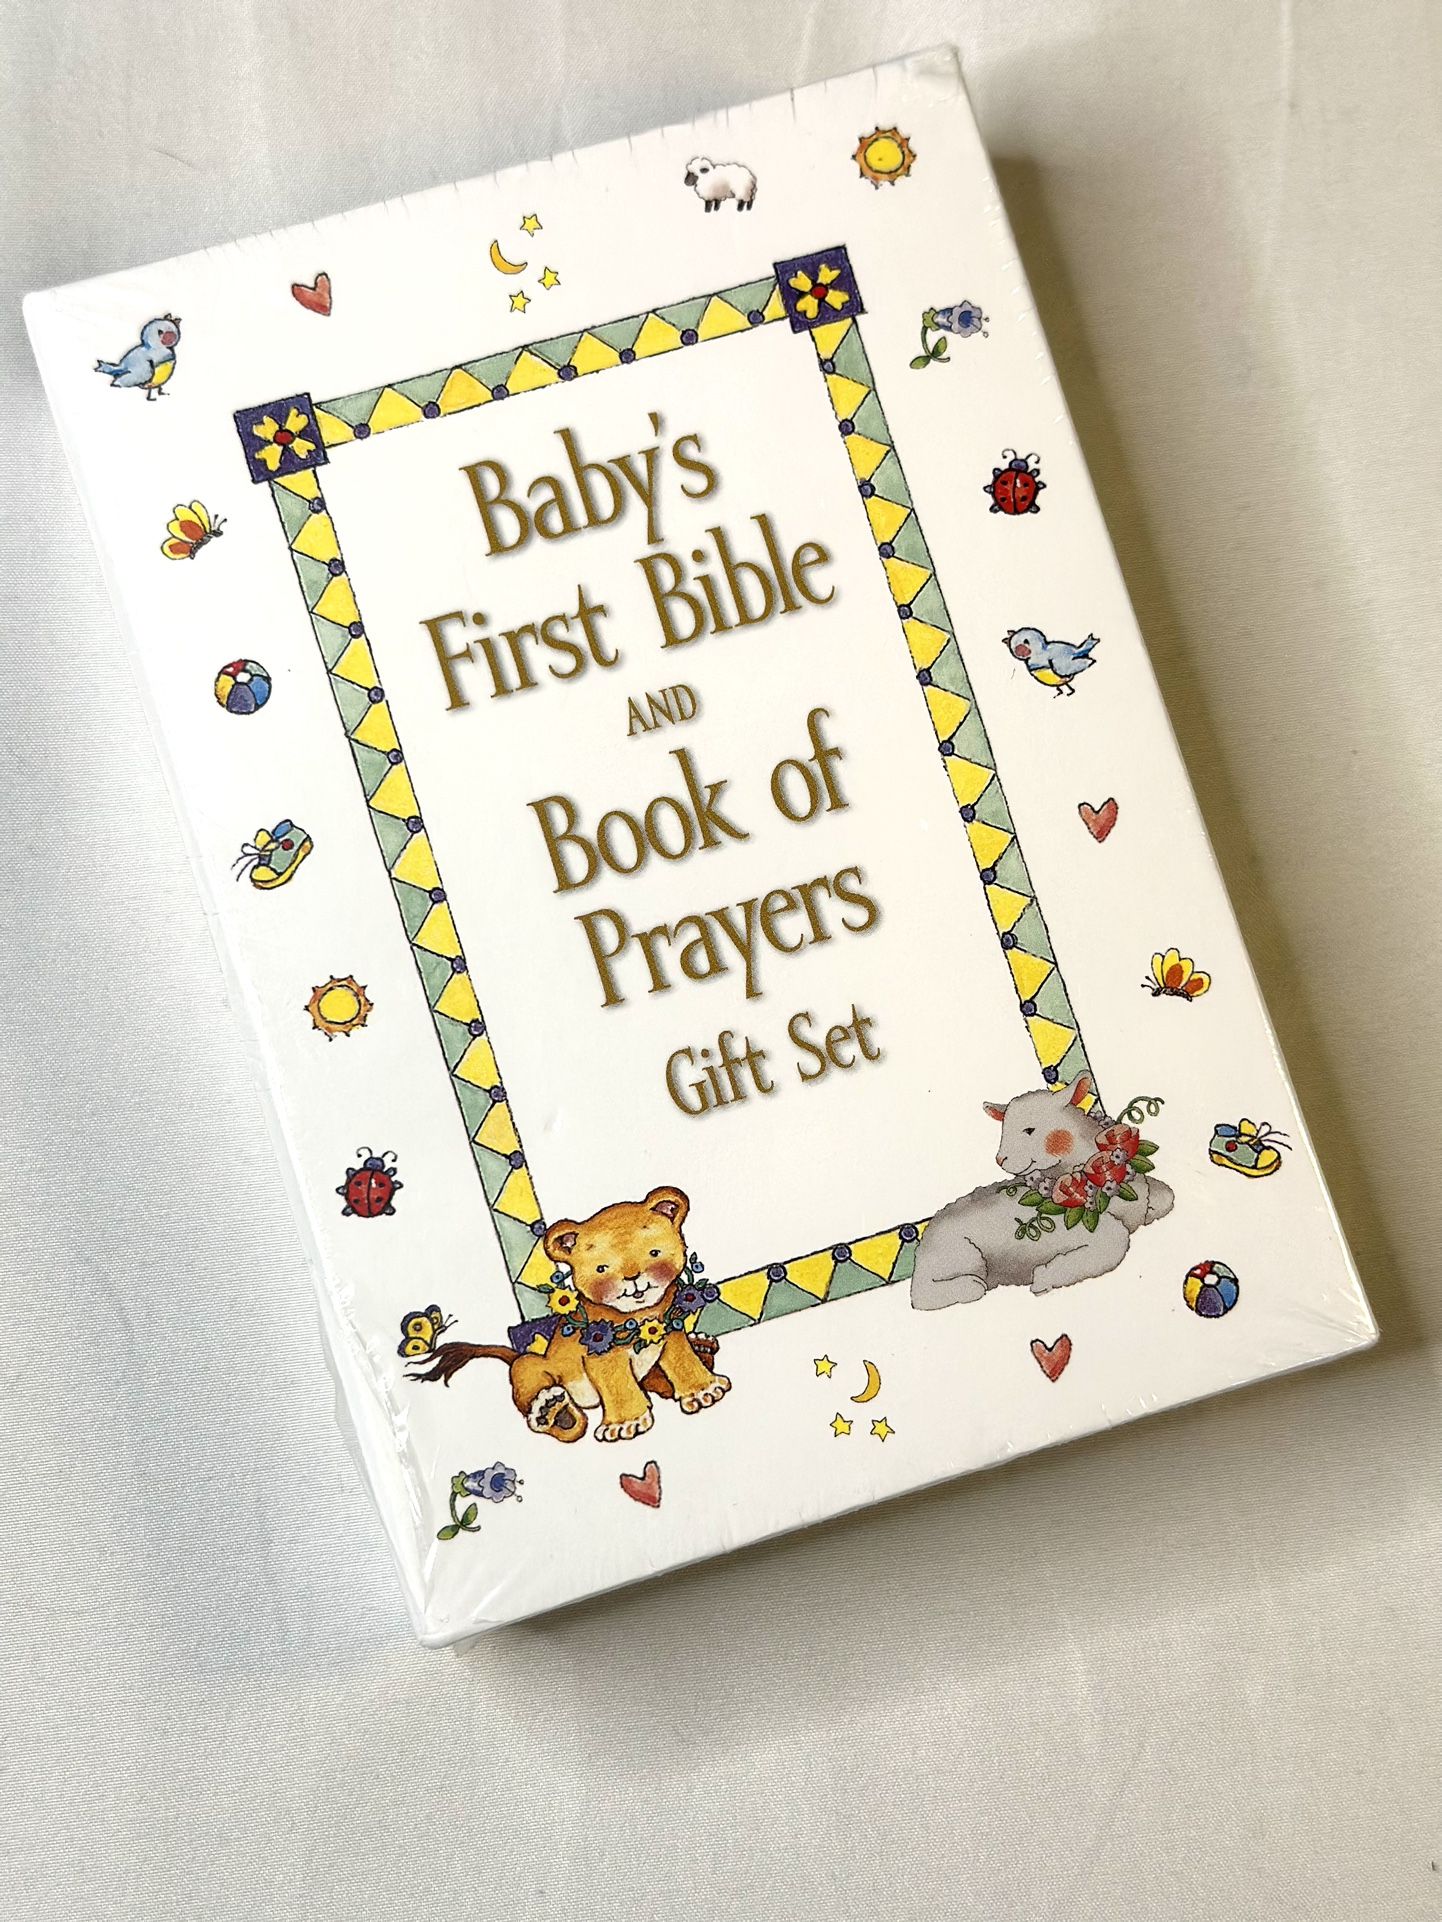 Babies First Bible - PICKUP AV At UNL East Campus